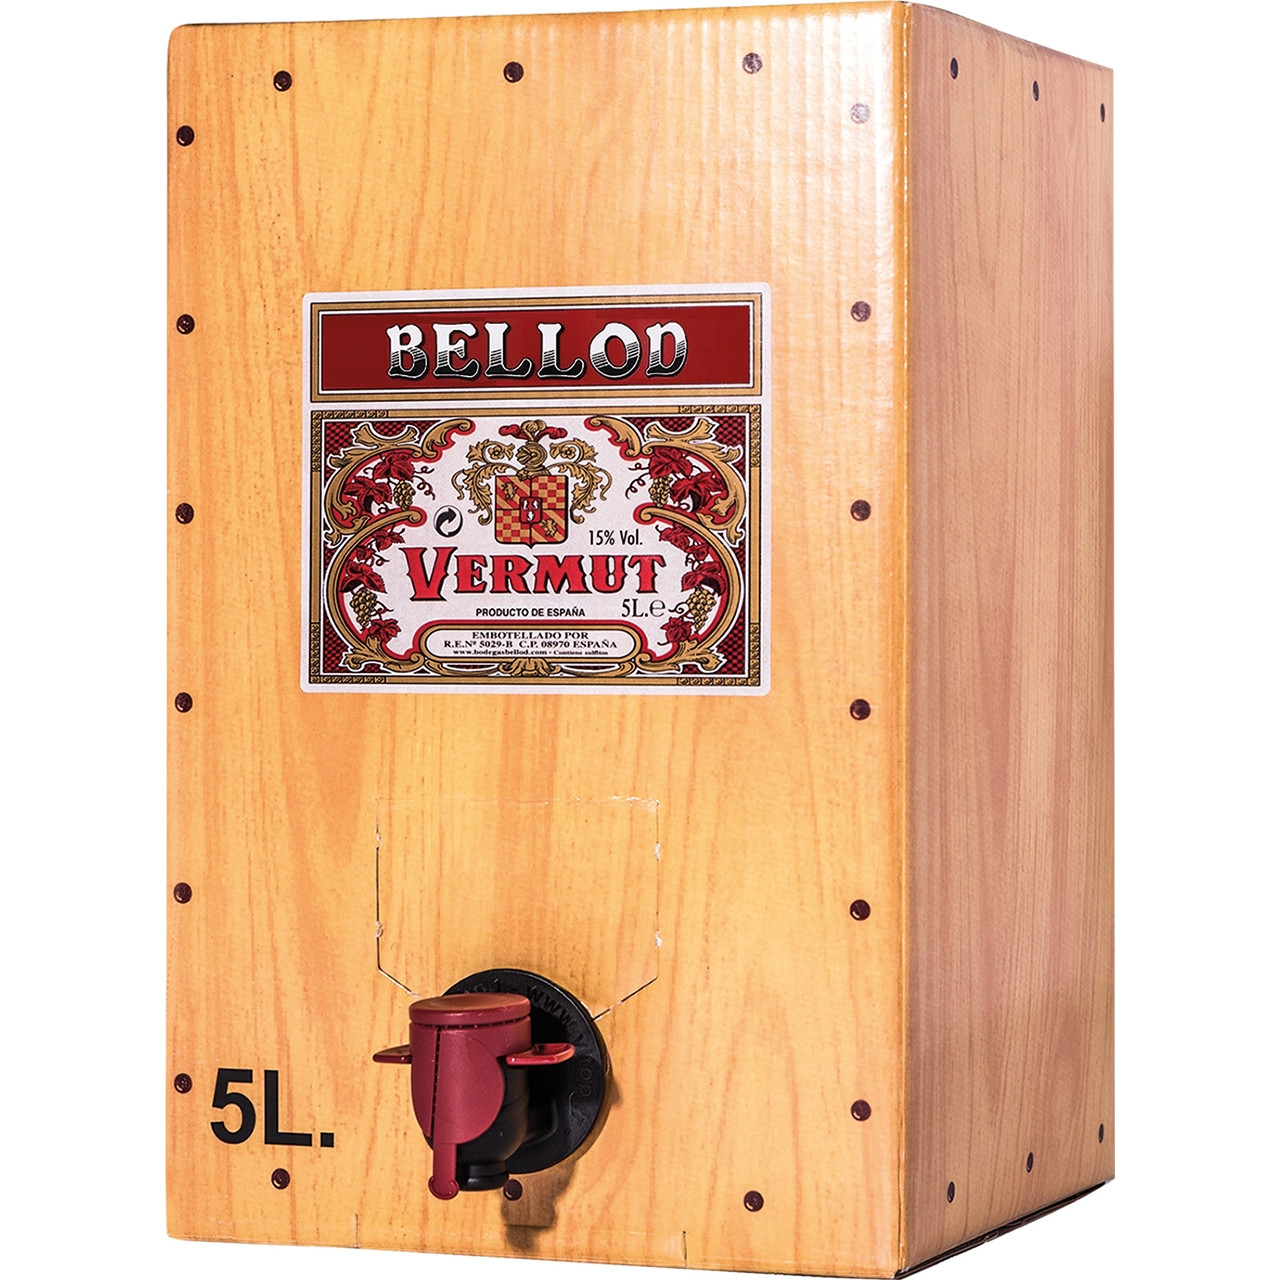 Bellod vermut box